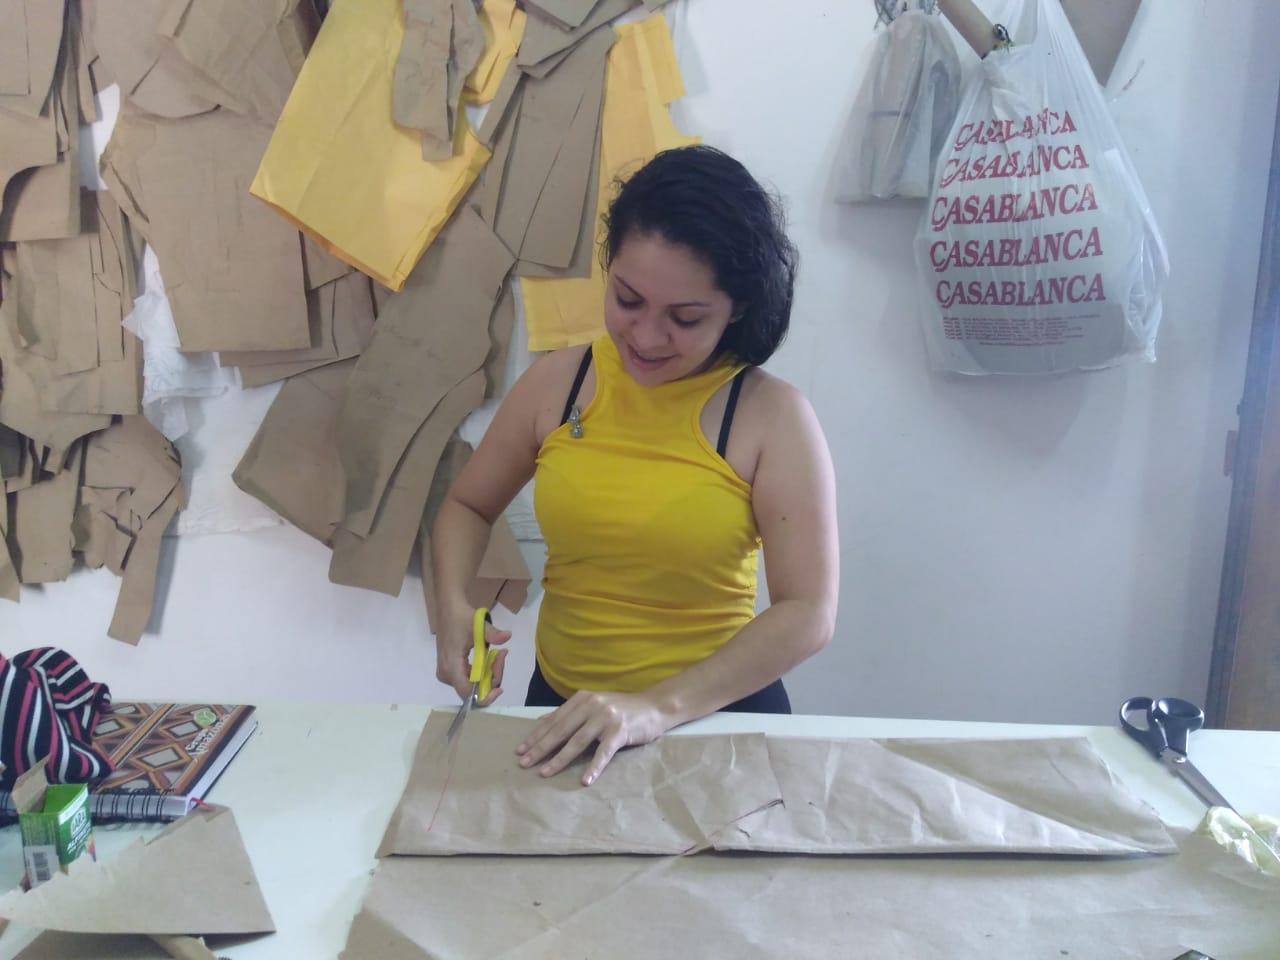 4 neue Schülerinnen im Nähkurs Projeto Textil, Brasilien - Child & Family Foundation 